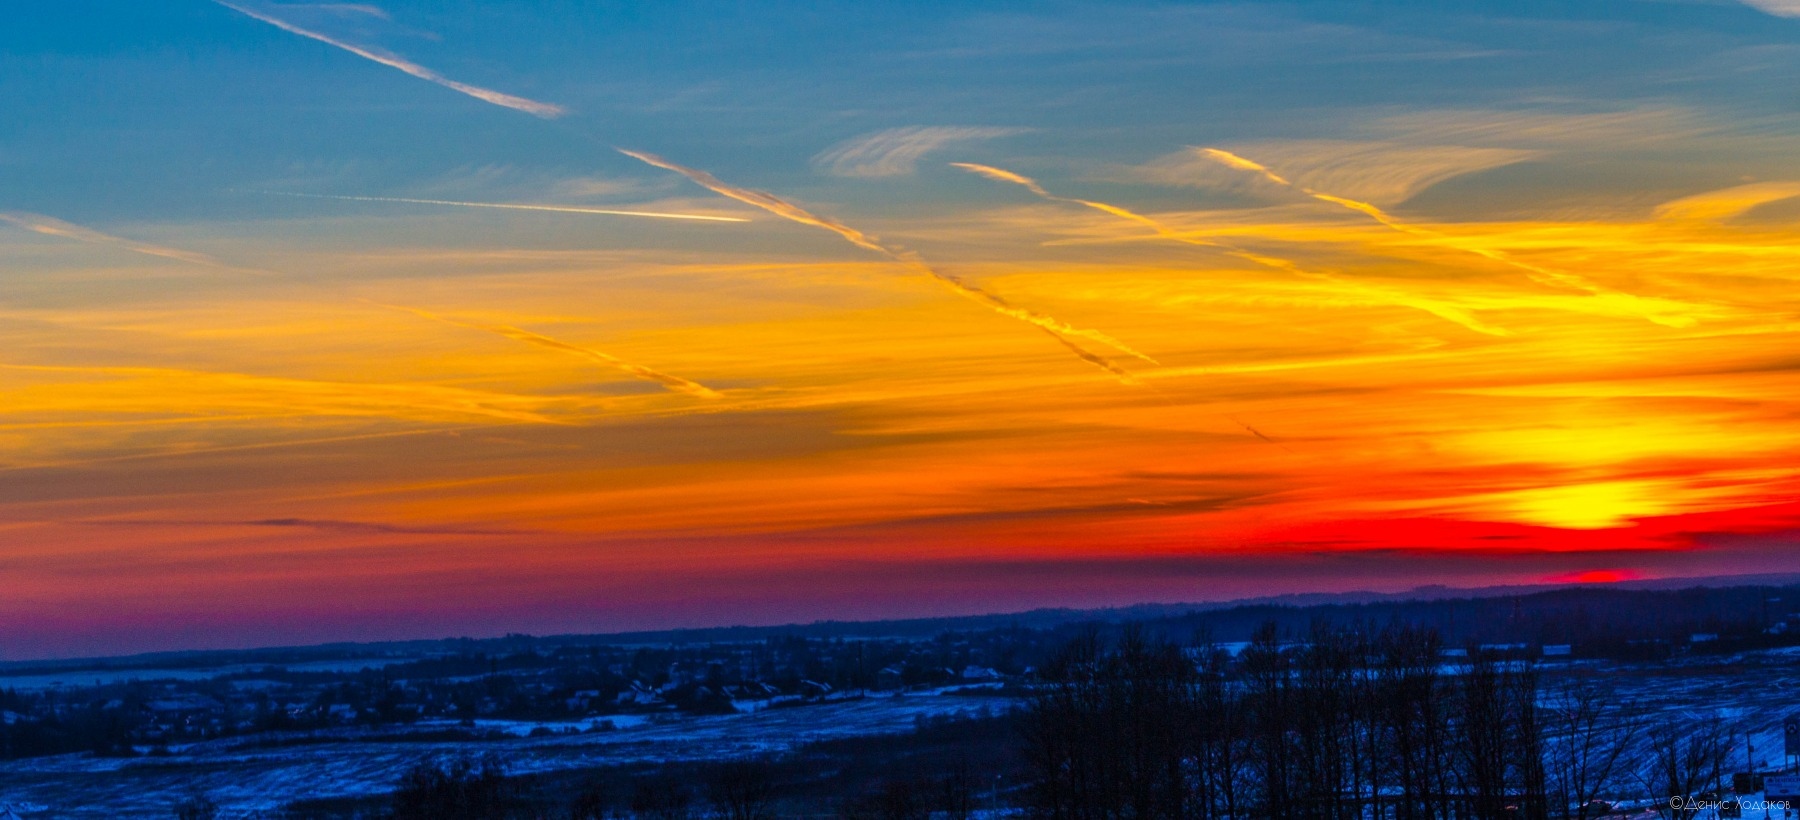 закат | Фотограф Денис Ходаков | foto.by фото.бай